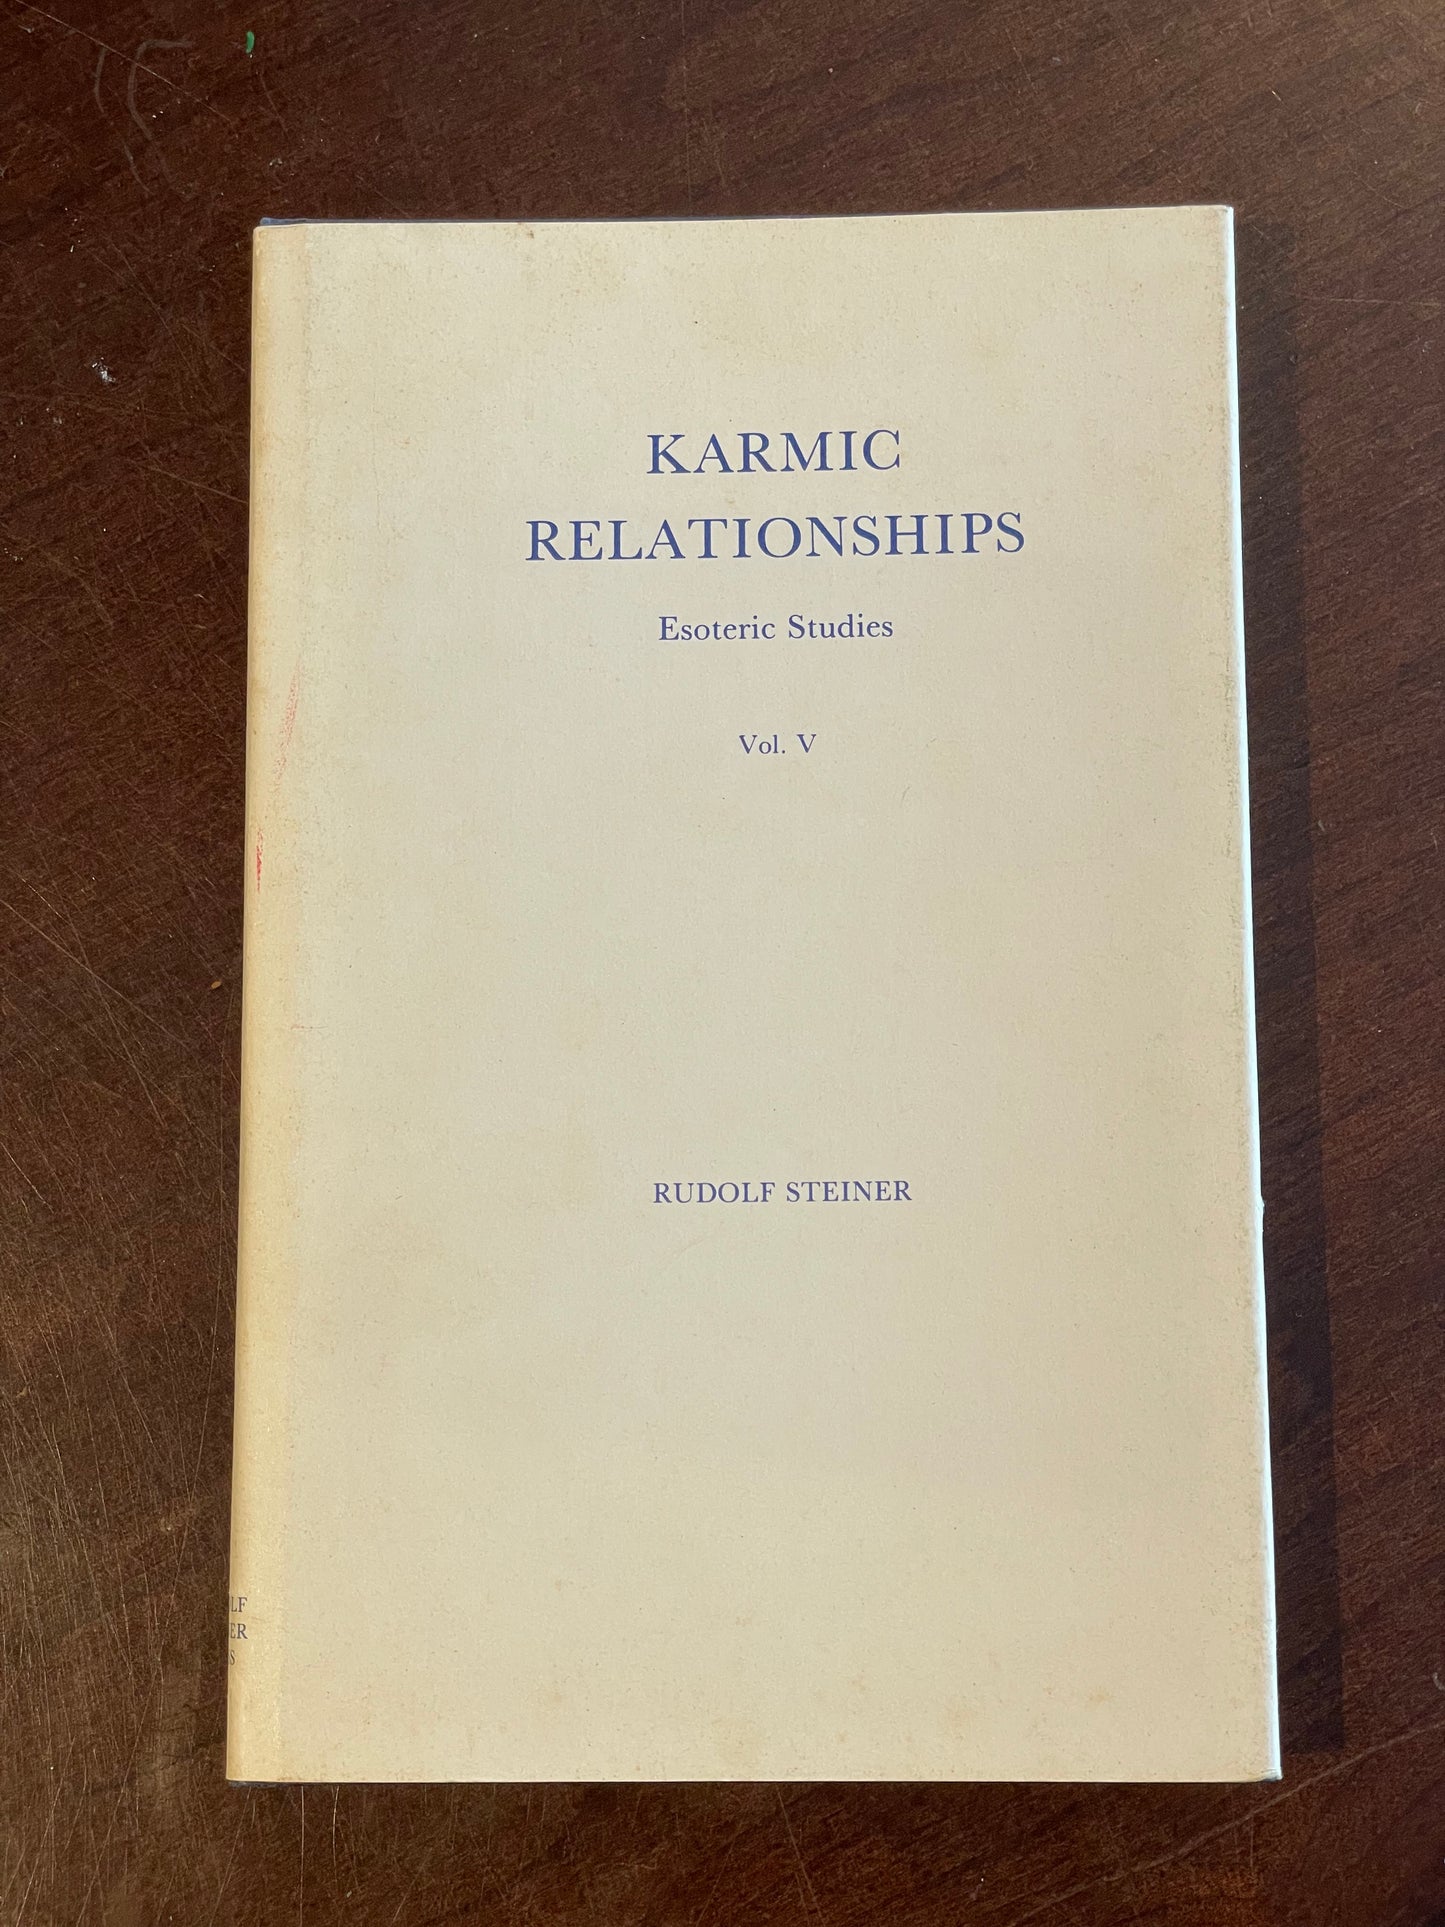 Karmic Relationships Vol. V by Rudolf Steiner